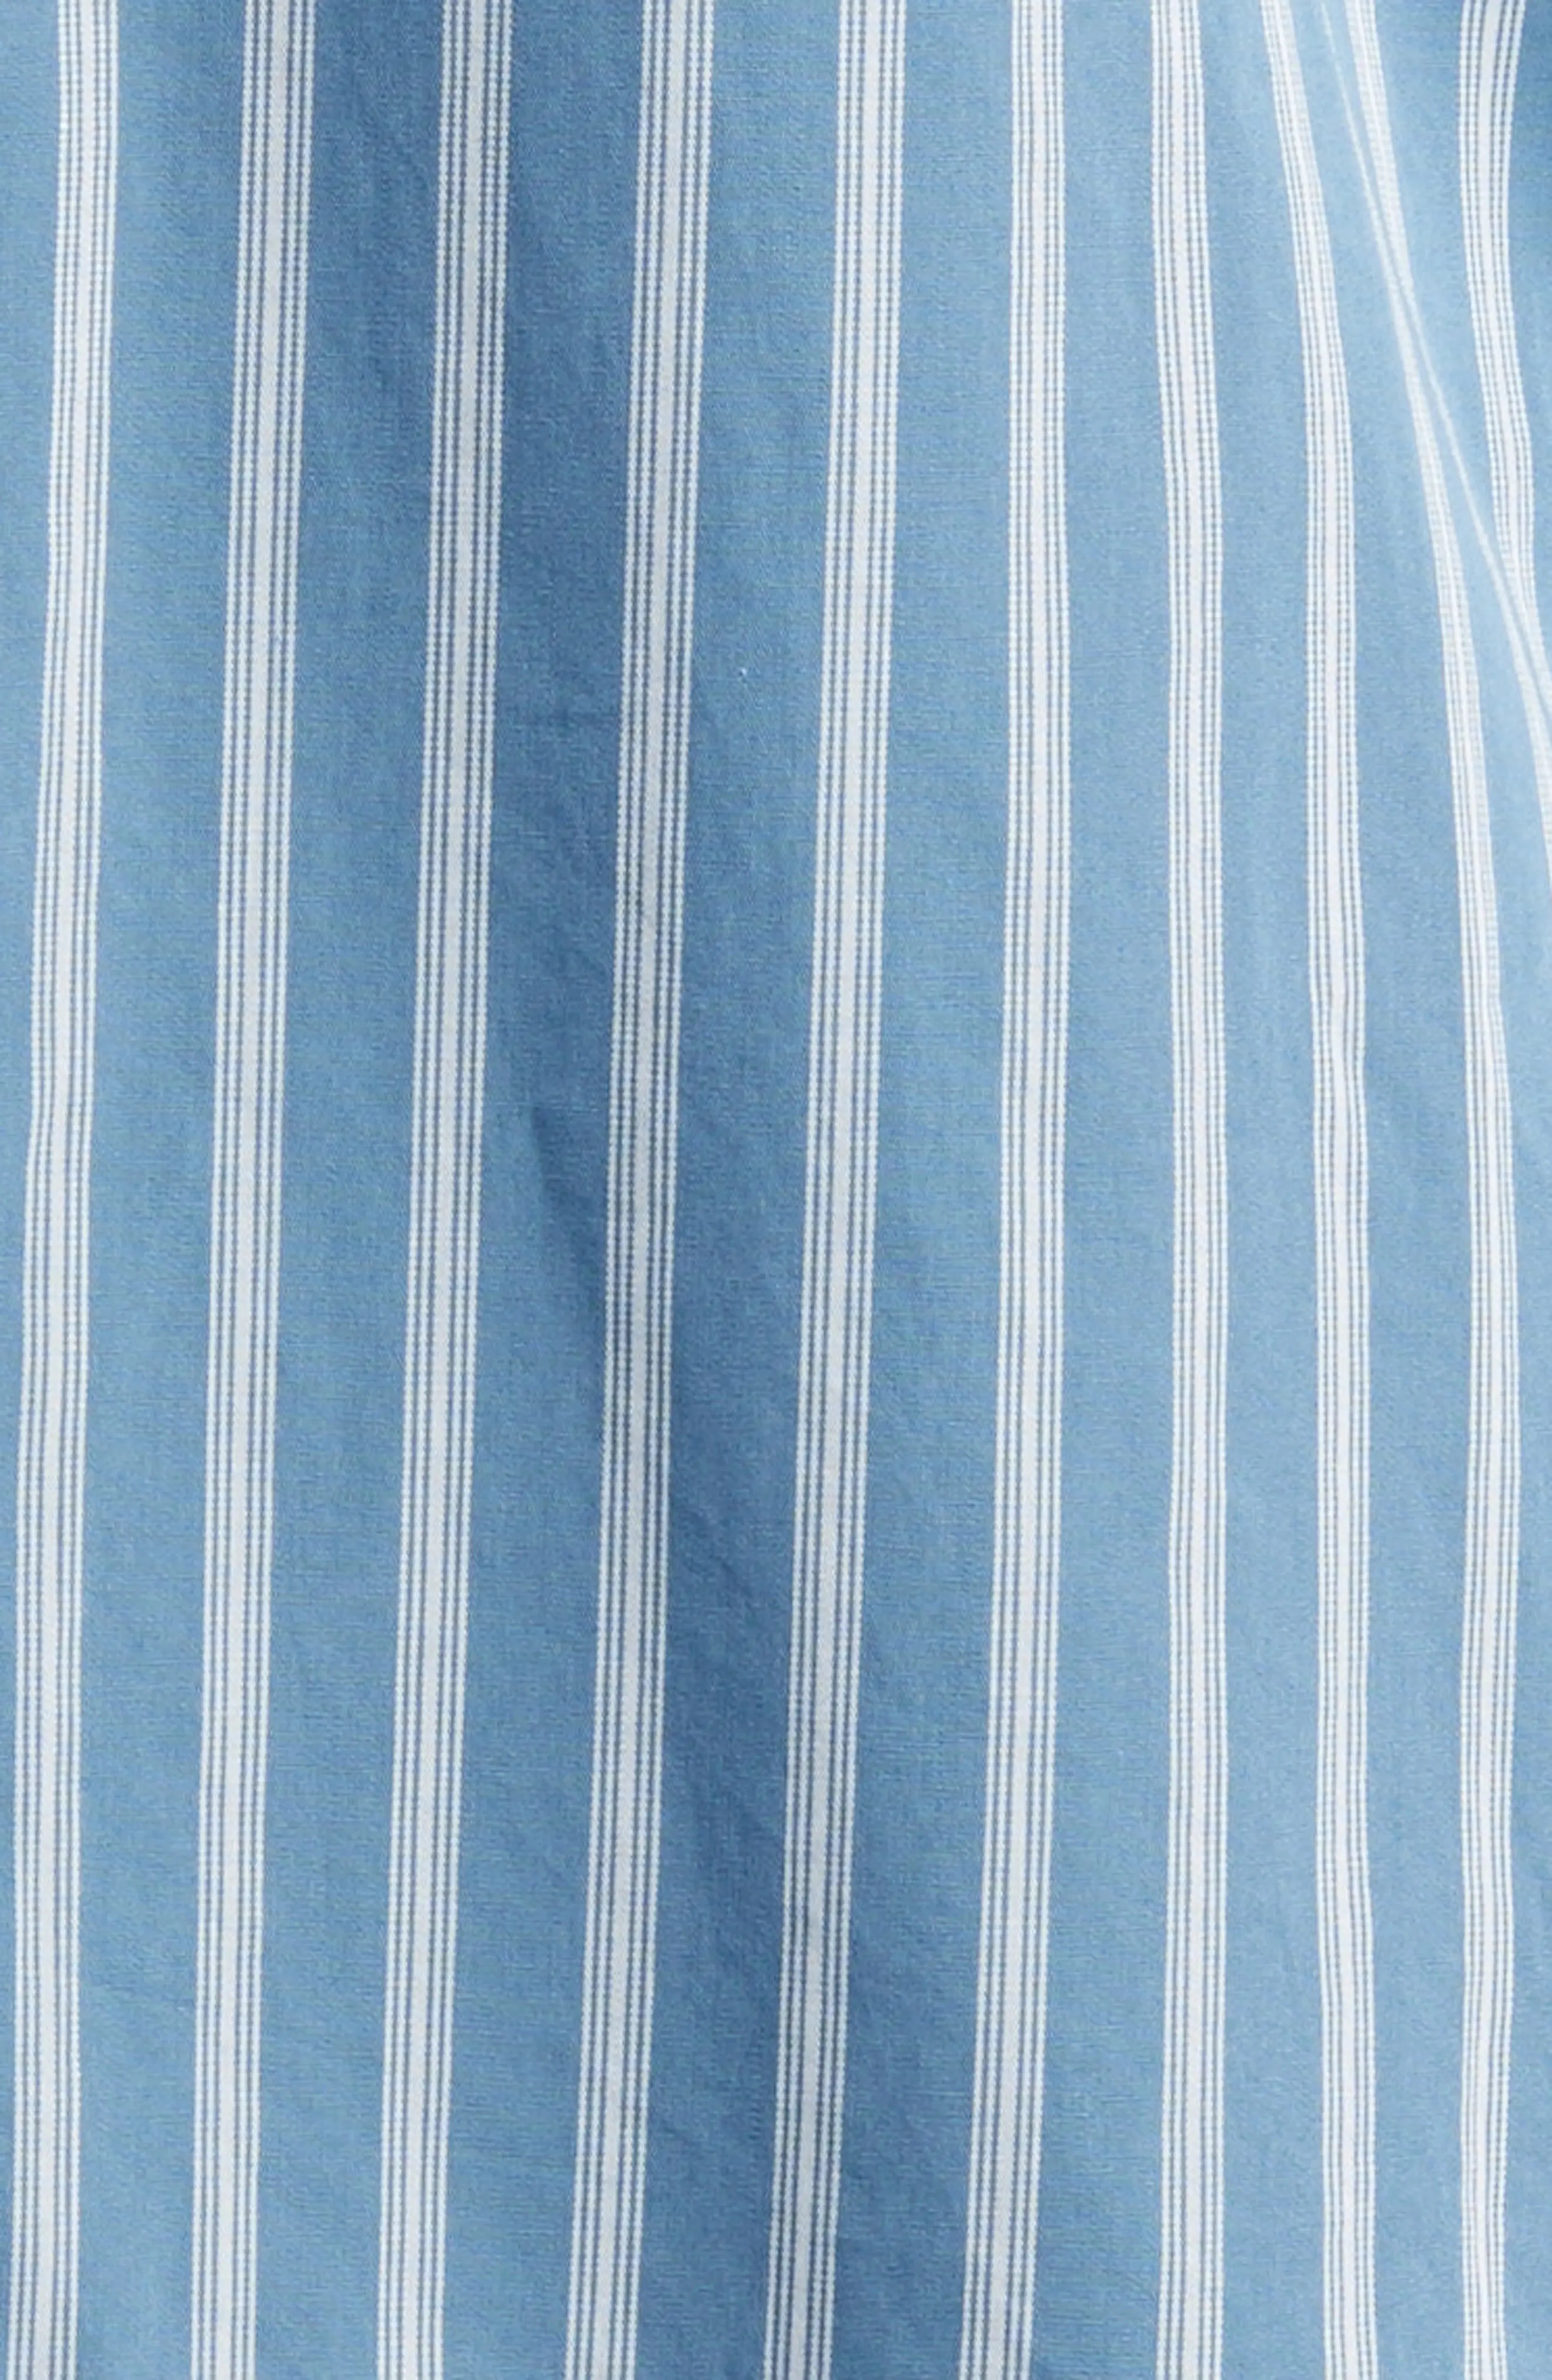 Ligety Stripe Button-Up Shirt in Ligety Stripe Blue/Wax - 5